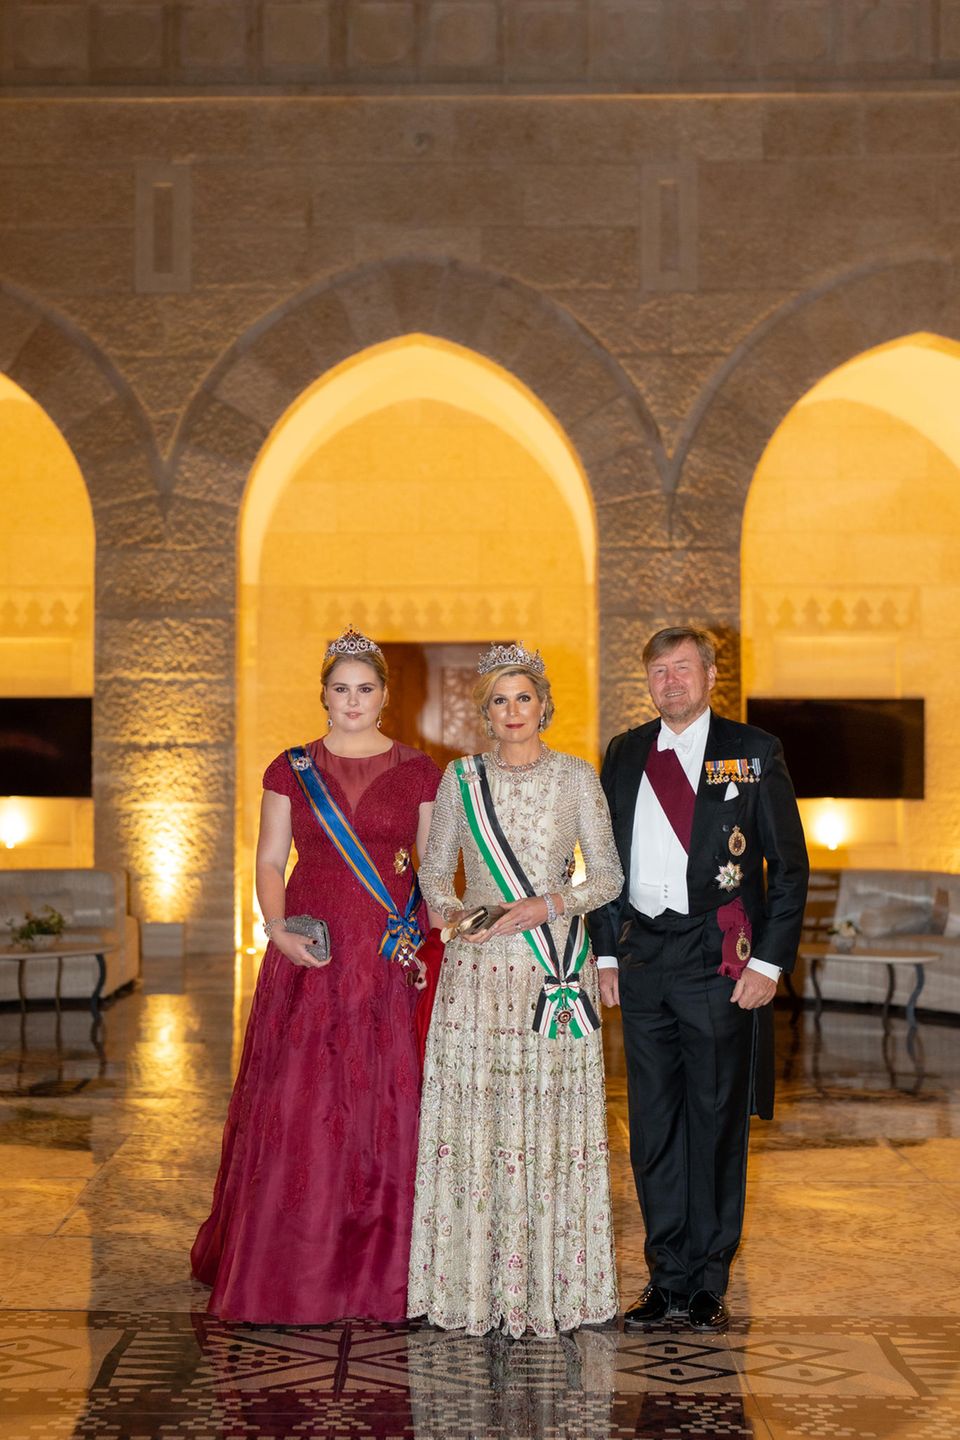 Princess Amalia, Queen Máxima and King Willem-Alexander